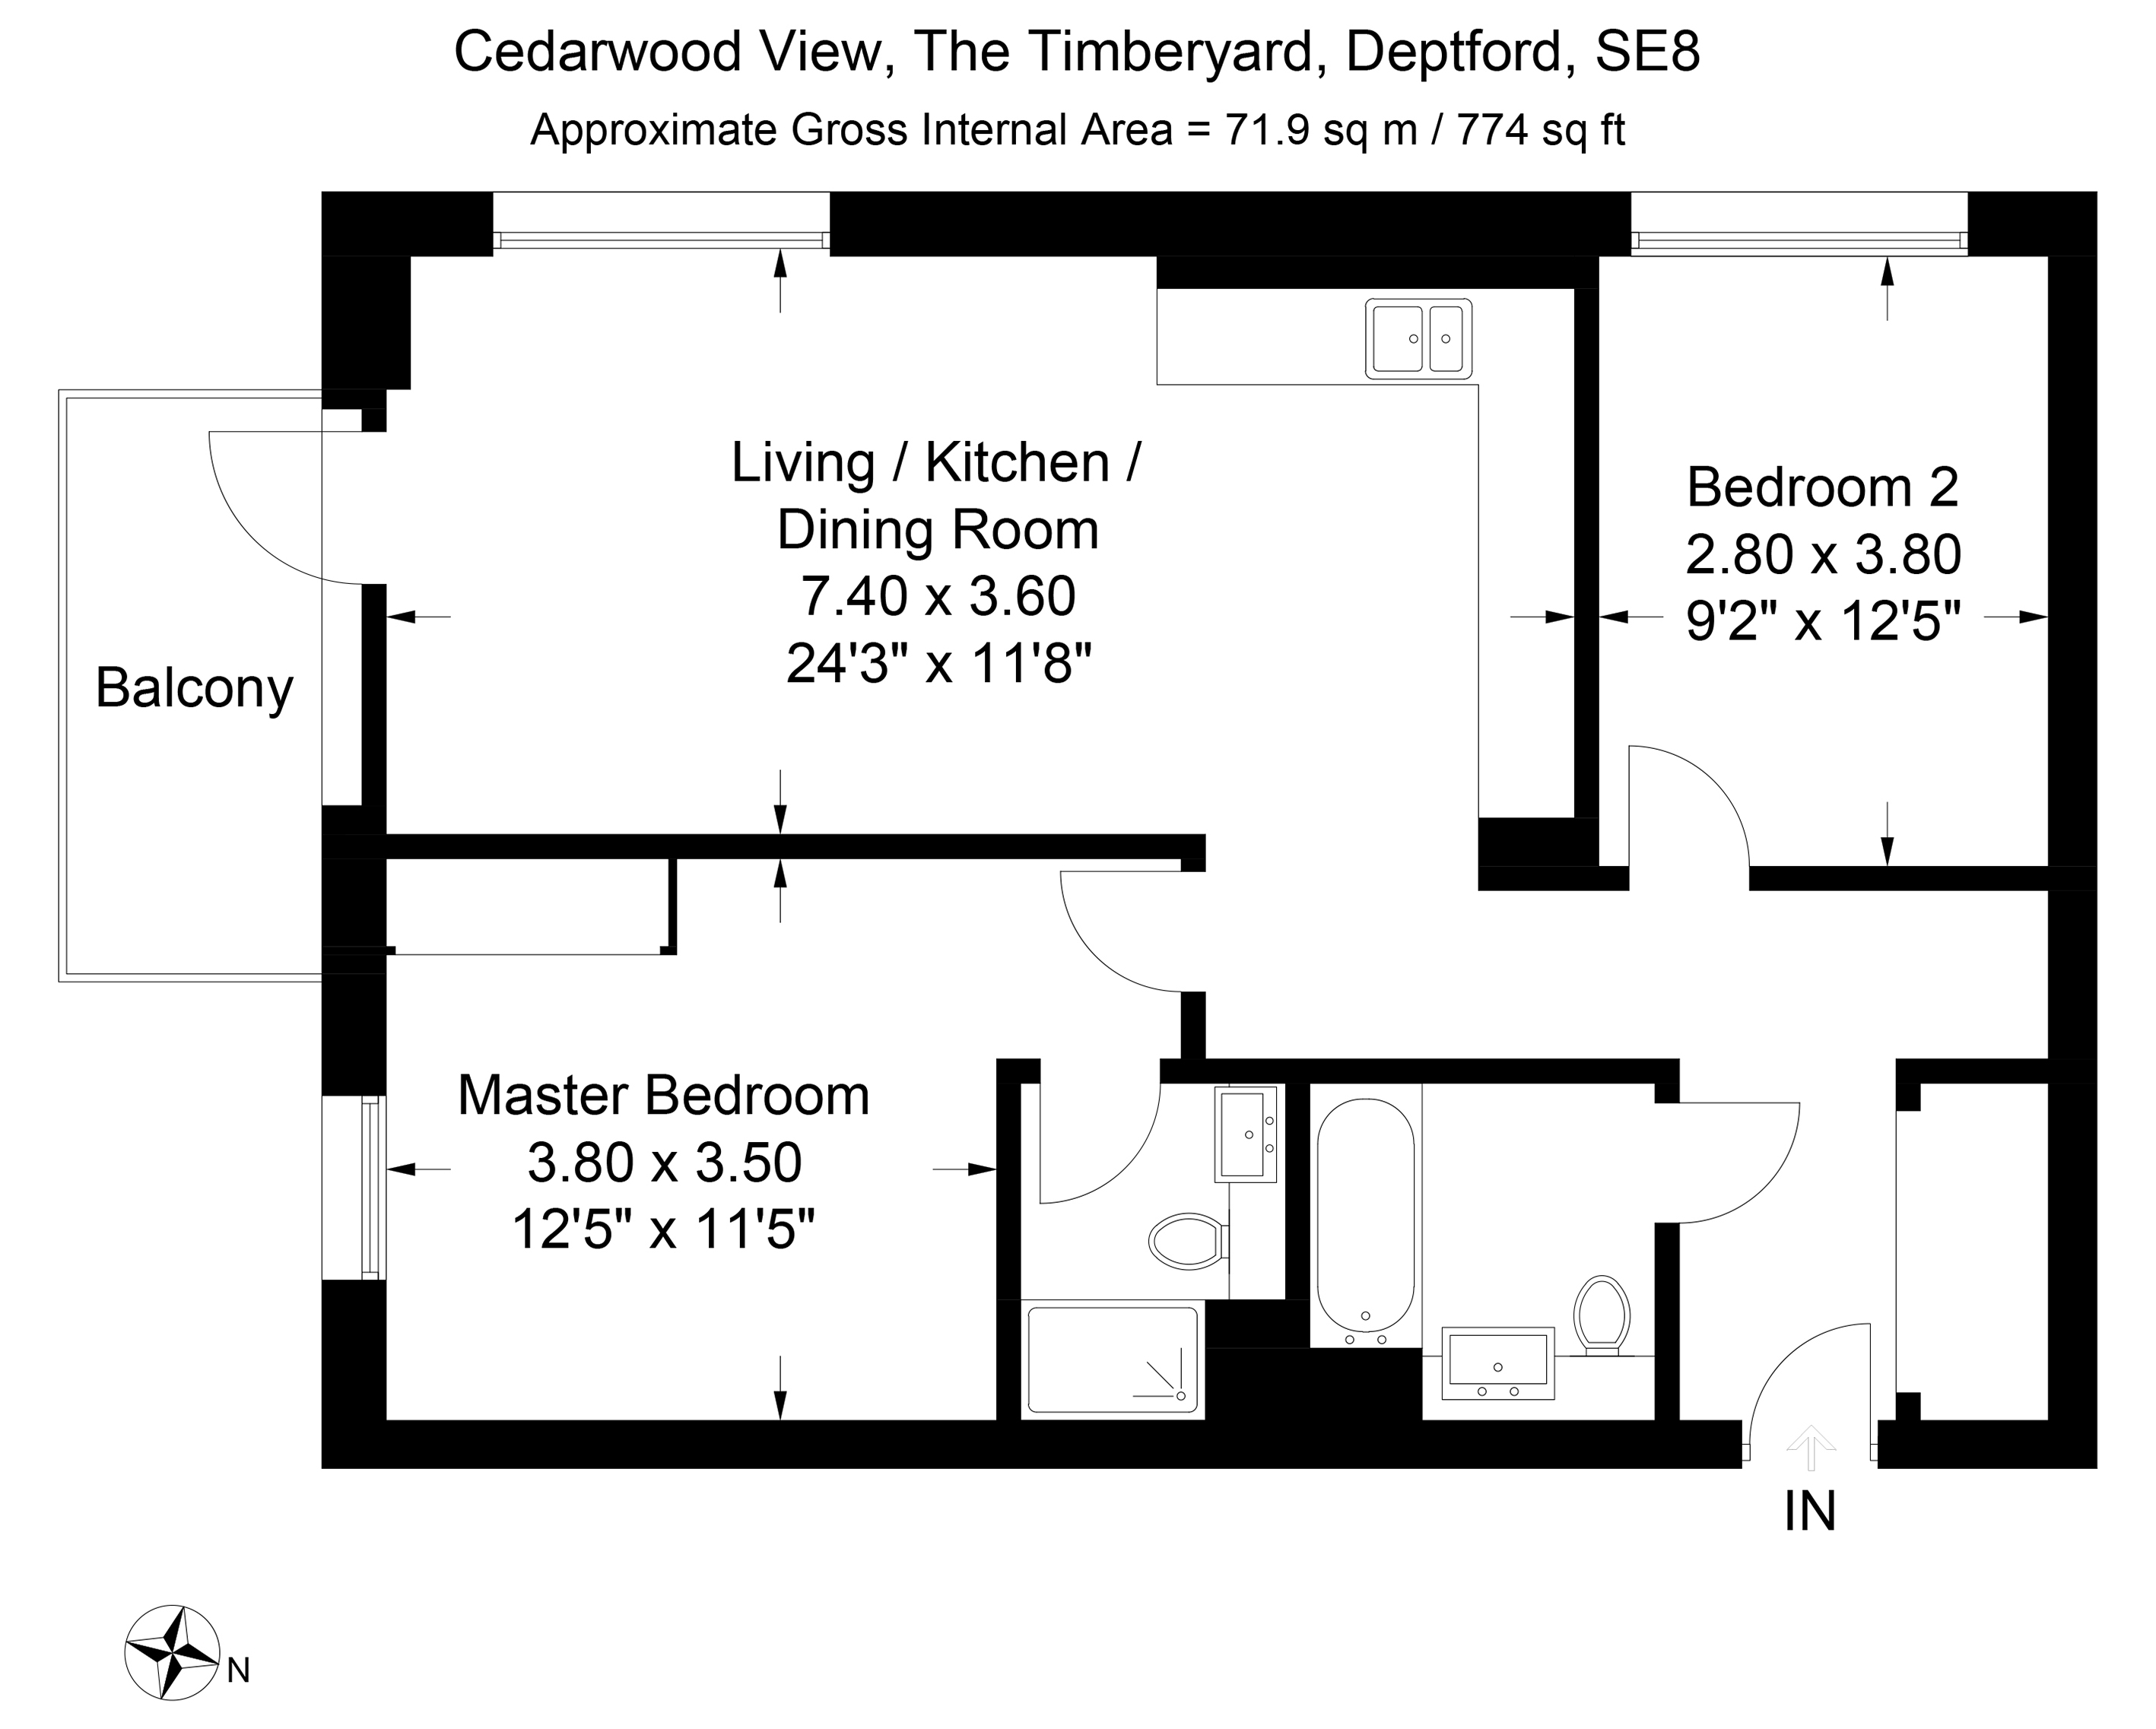 The Timberyard two bedroom floor plan